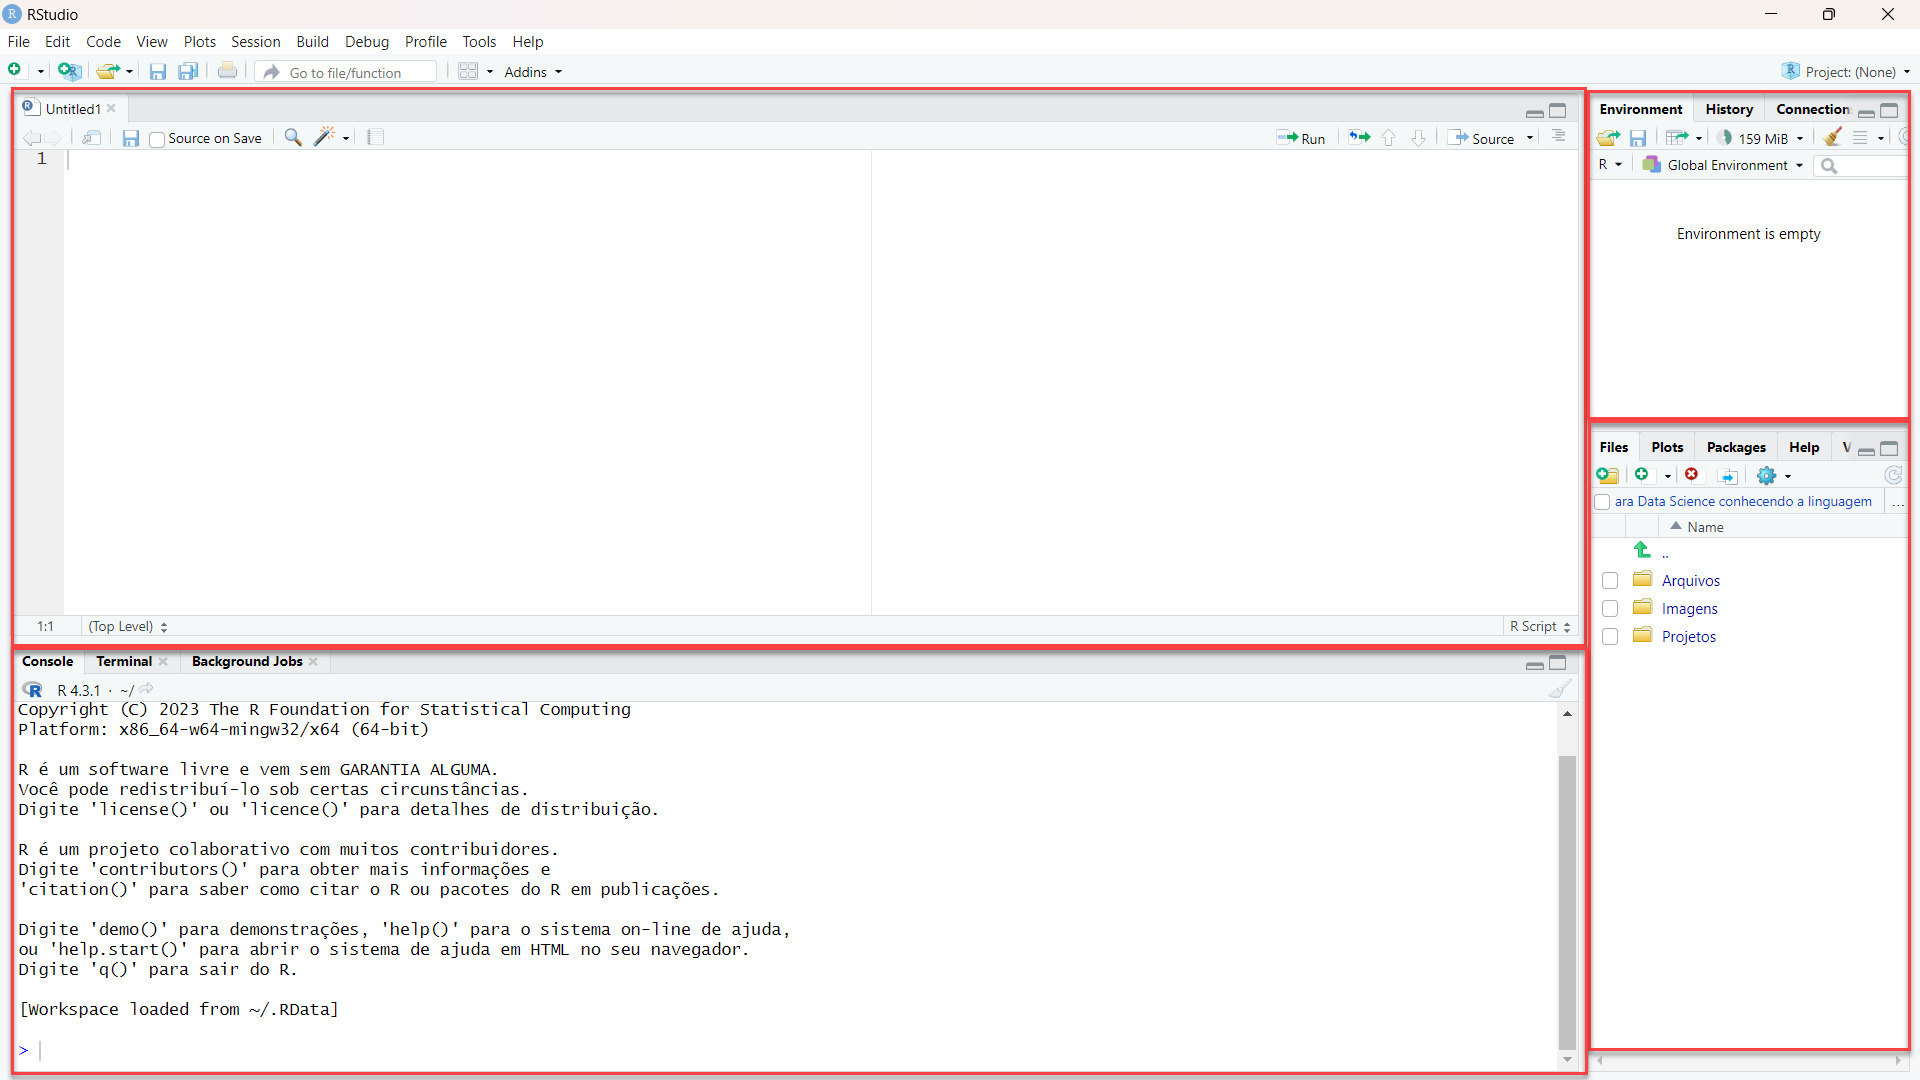 Captura de tela do editor RStudio, contendo as telas de editor de texto, console, ambiente e arquivos.